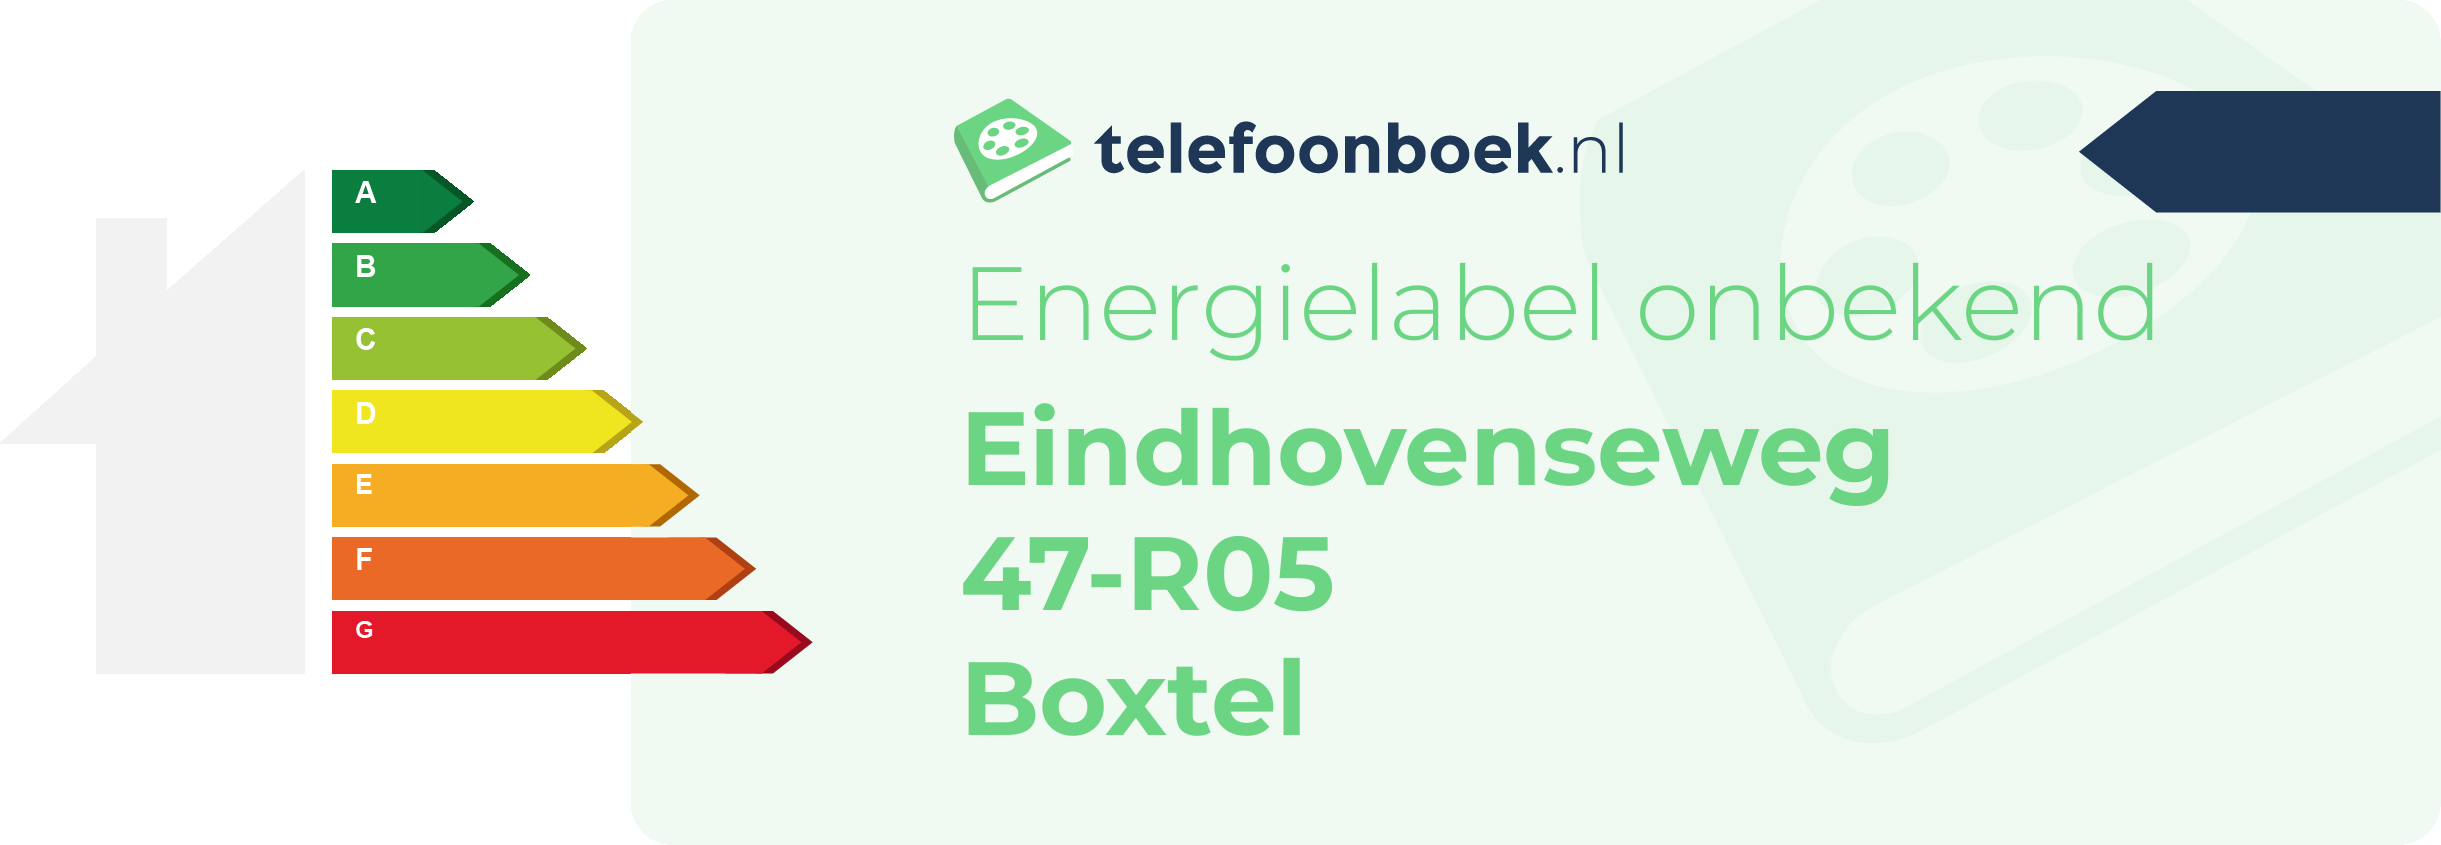 Energielabel Eindhovenseweg 47-R05 Boxtel